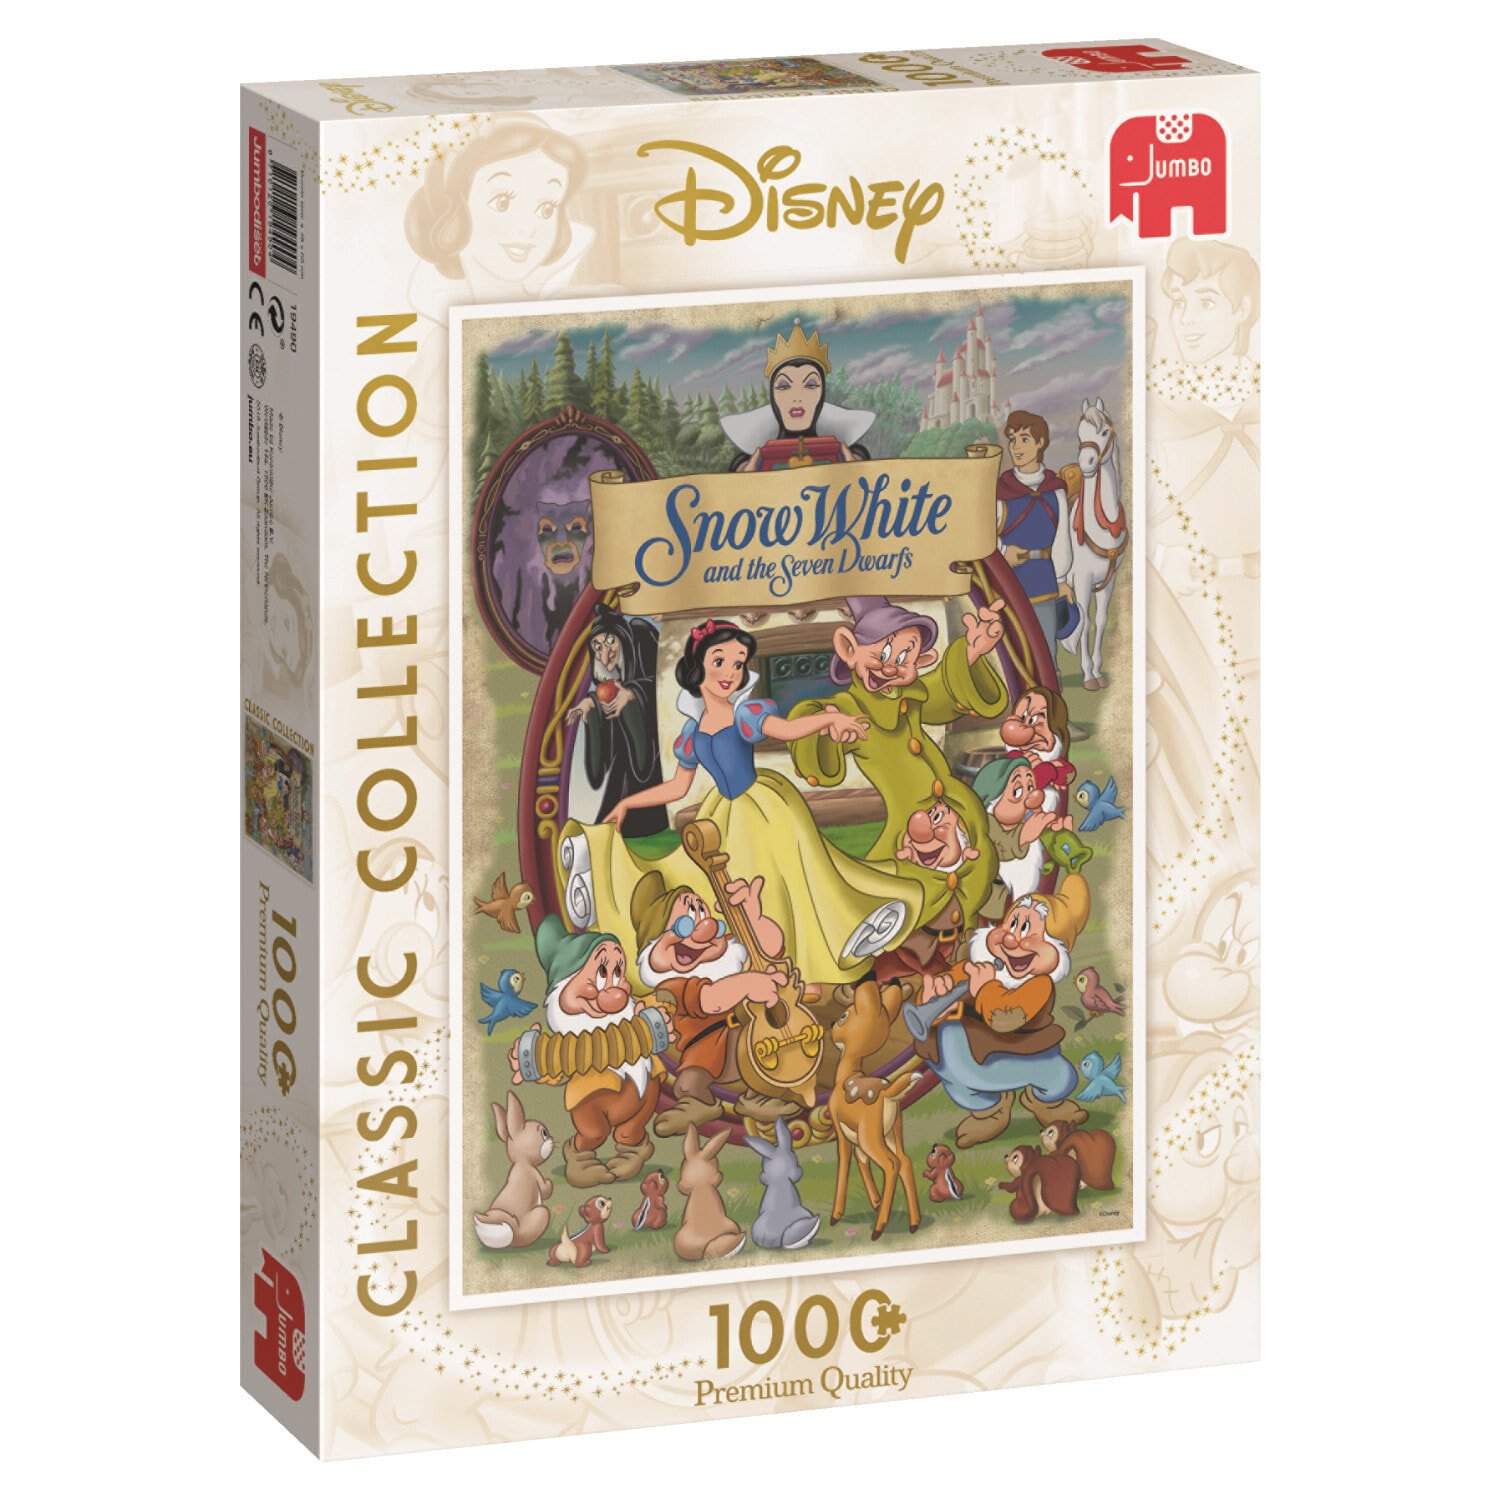 Disney Snow White Movie Poster 1000 pcs Составная картинка-головоломка 1000 шт 19490